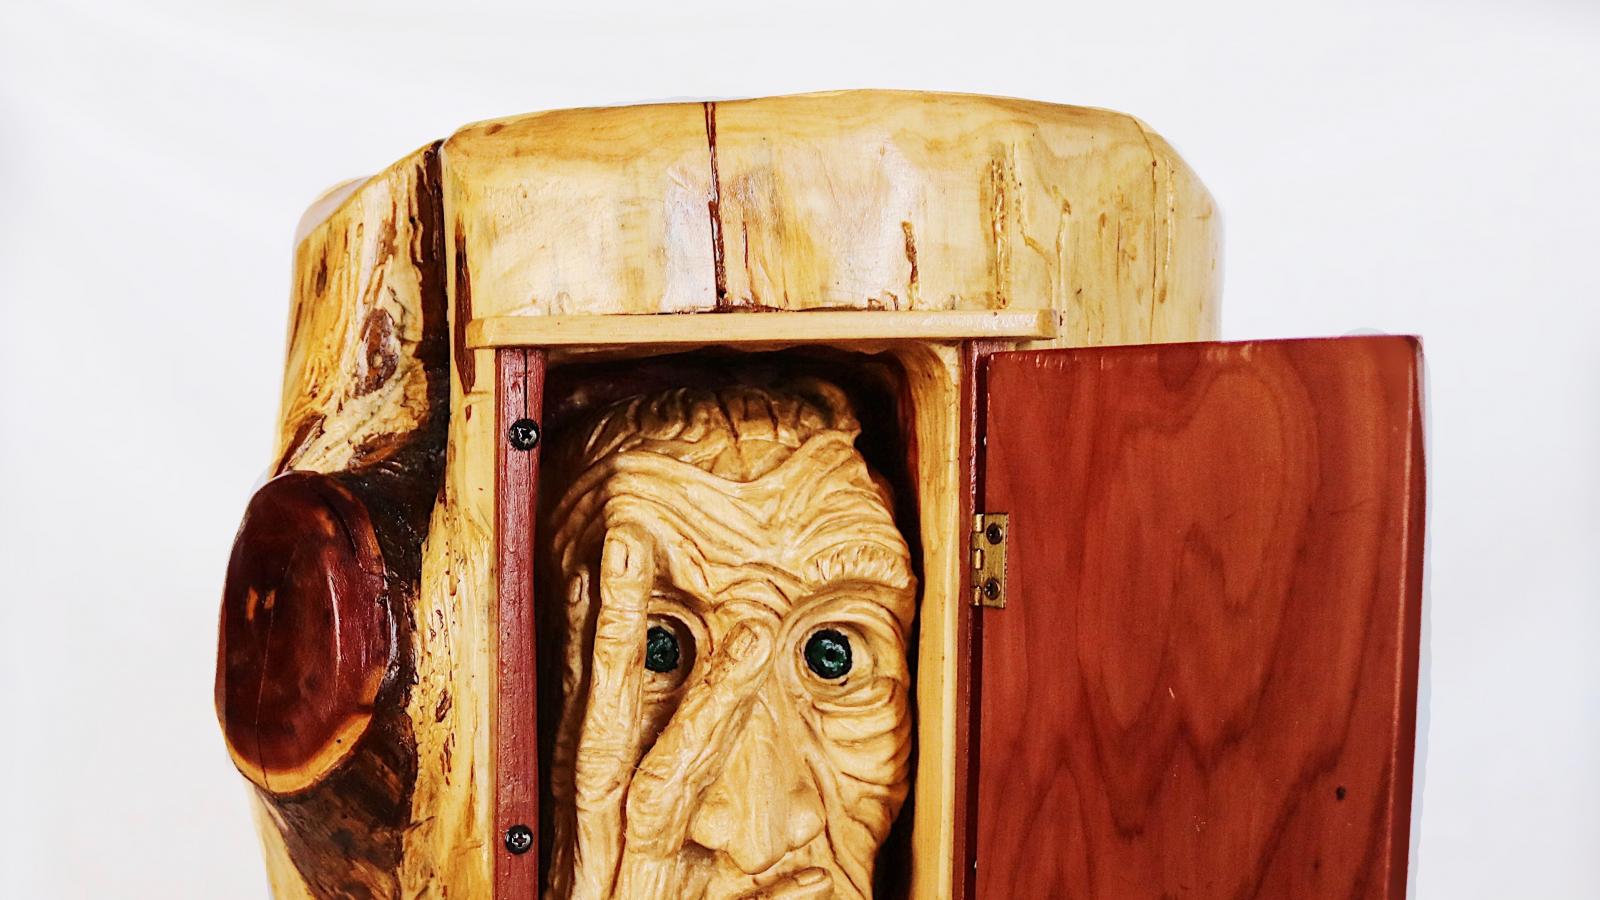 wood carving of a wrinkled face inside a log